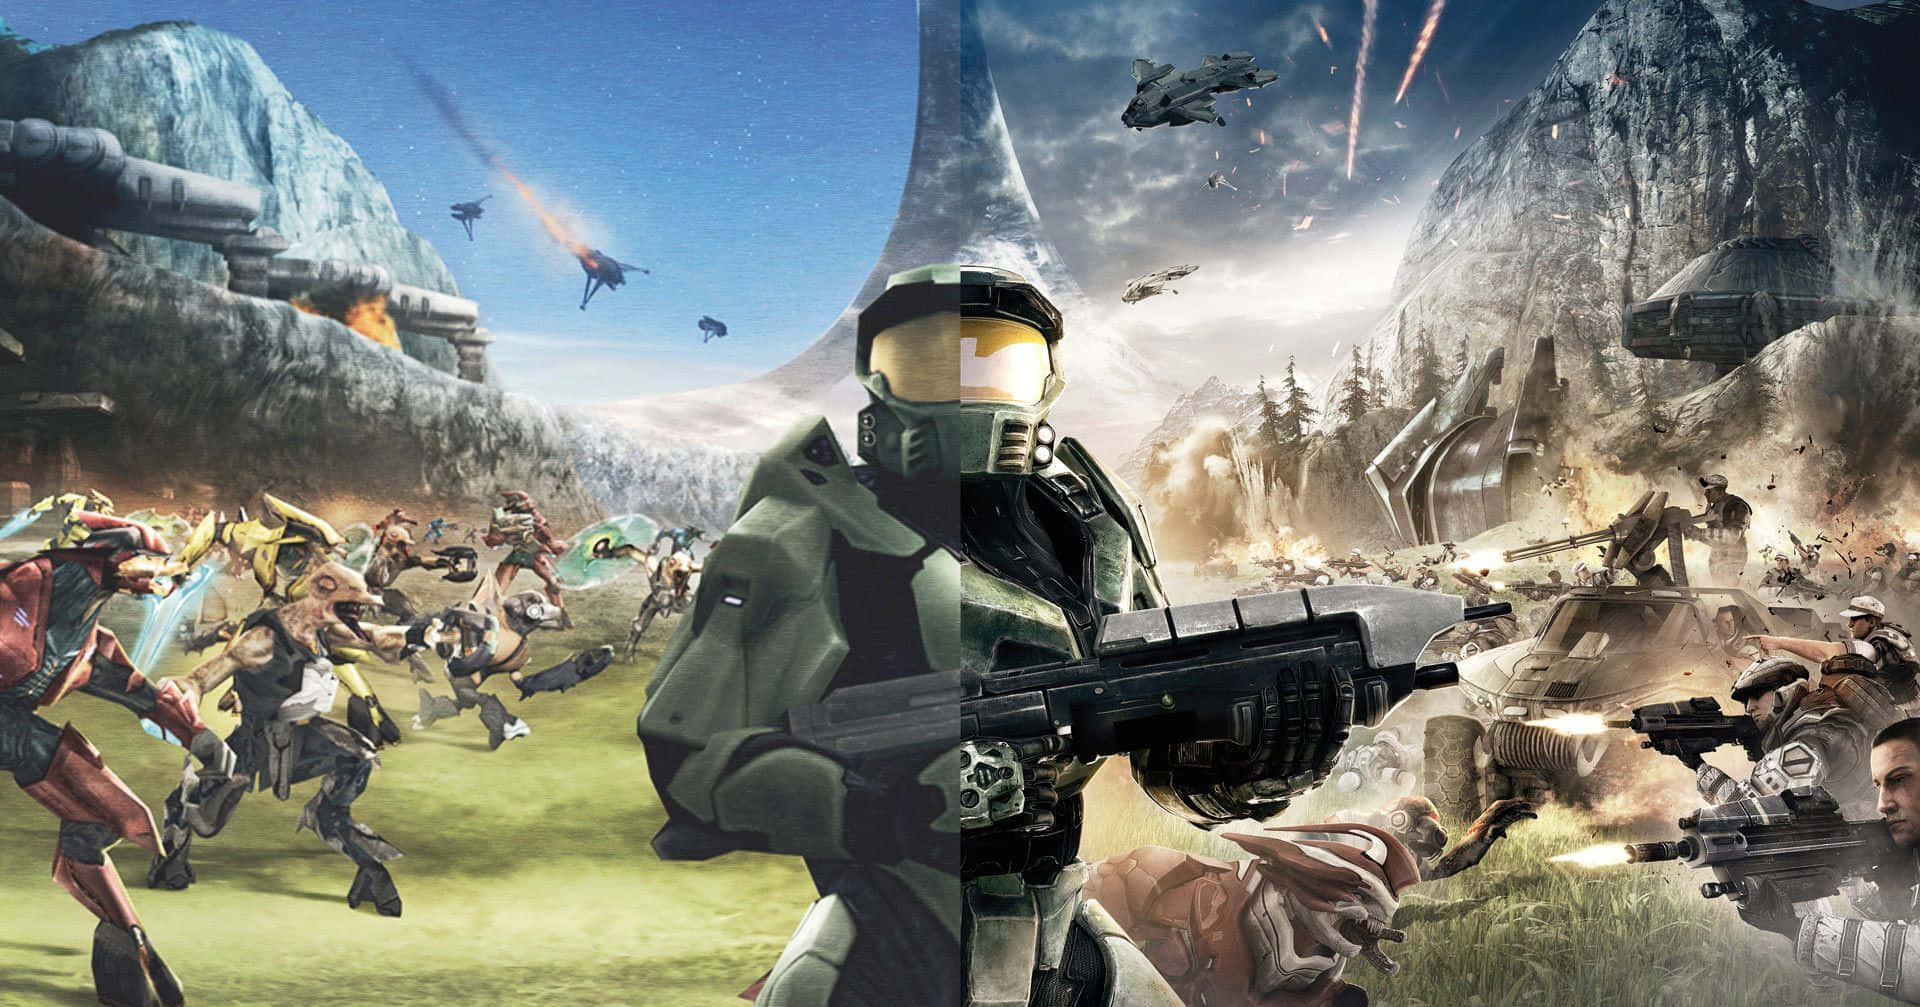 Escenaintensa De Batalla Del Universo Halo. Fondo de pantalla